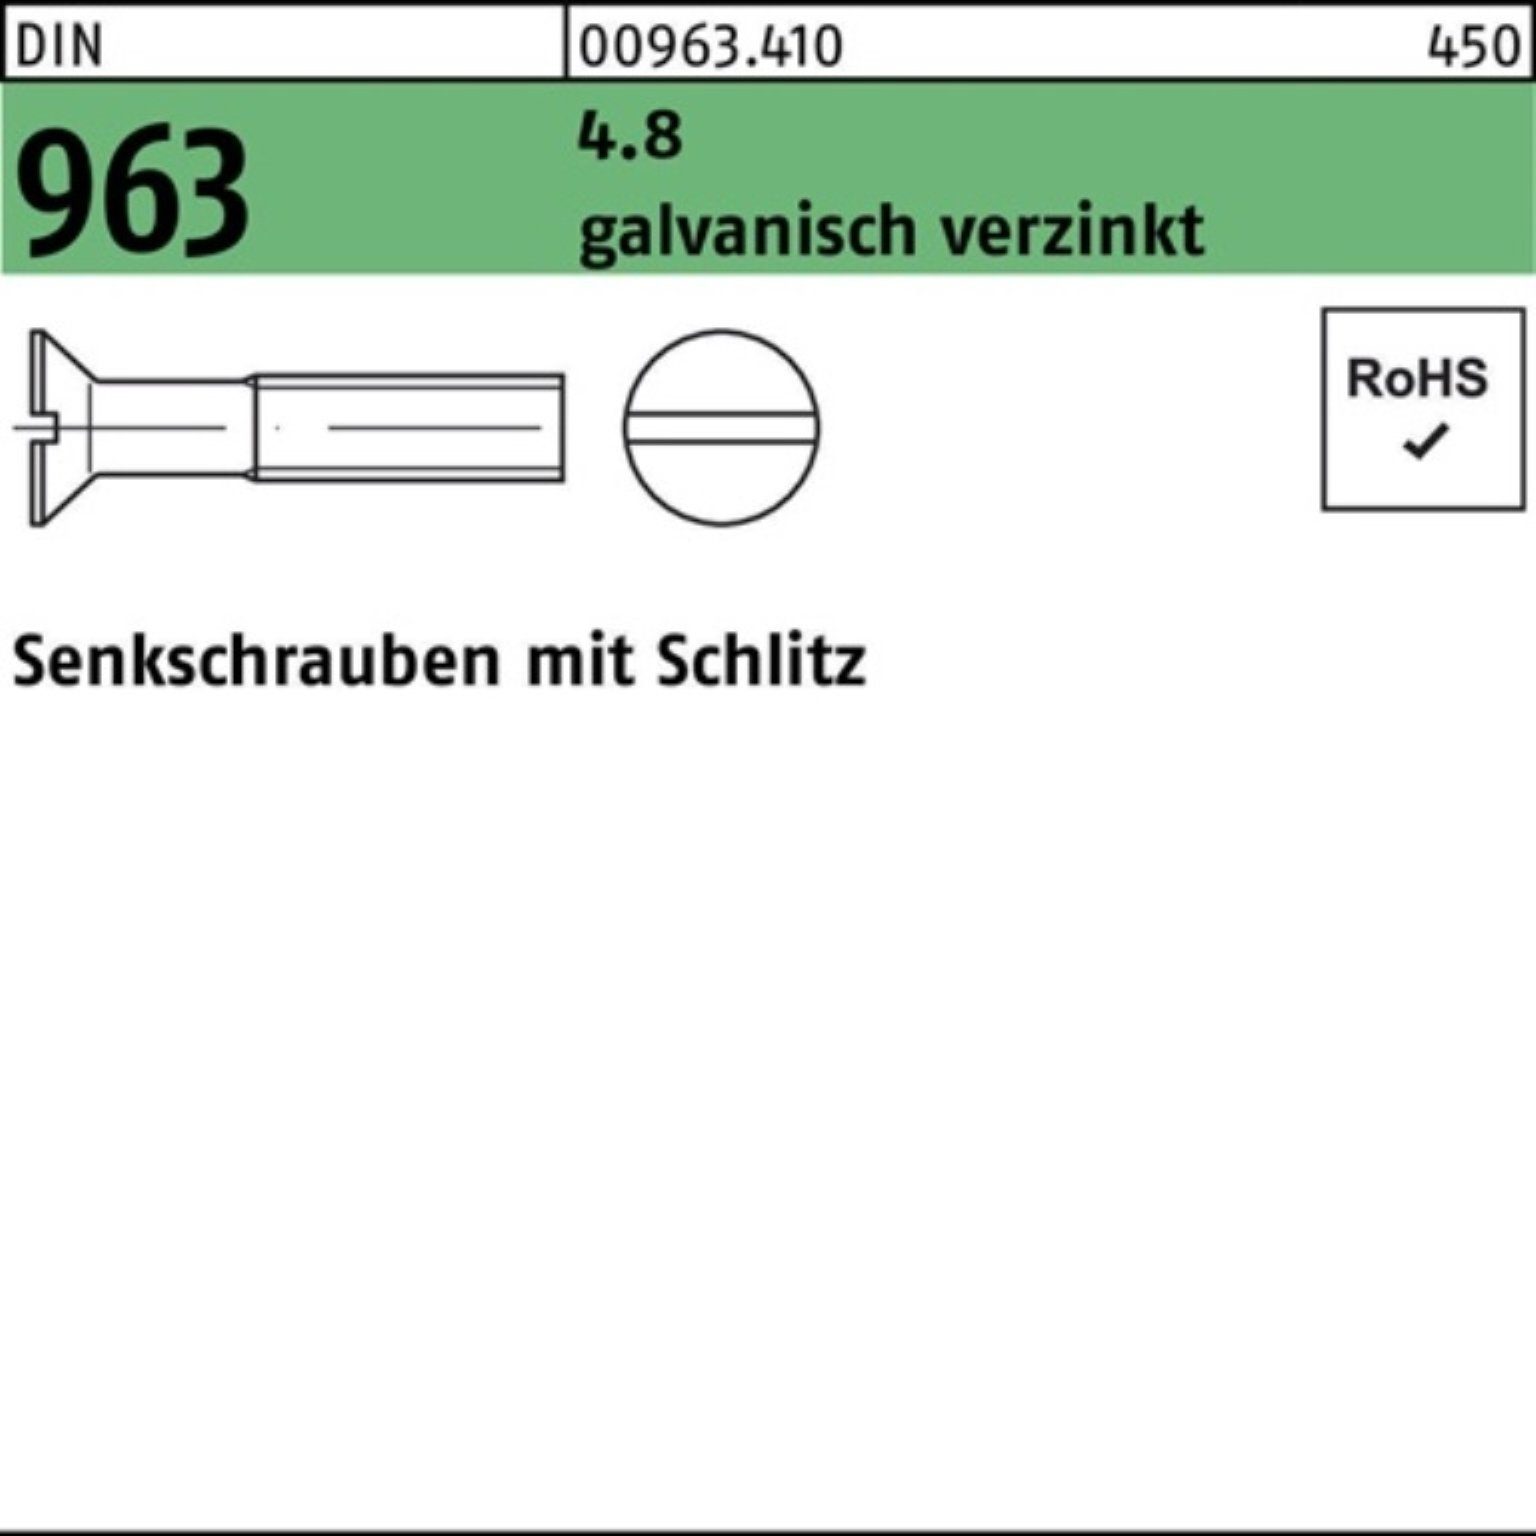 Reyher Senkschraube 22 M4x Schlitz 4.8 DIN Stü 200 200er Senkschraube Pack 963 galv.verz